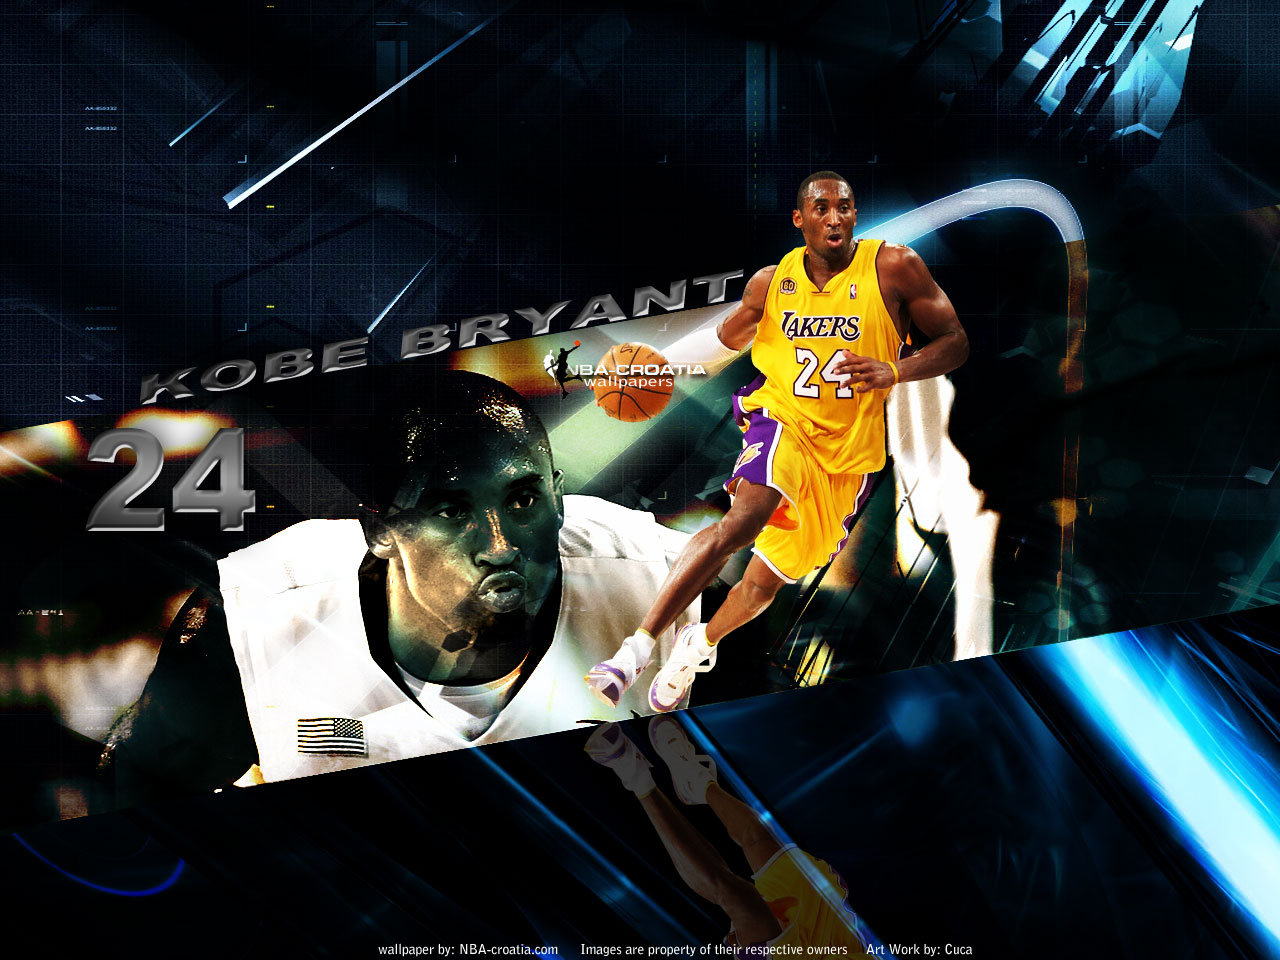 Kobe Bryant 2009 wallpaper by Cuca24 on deviantART